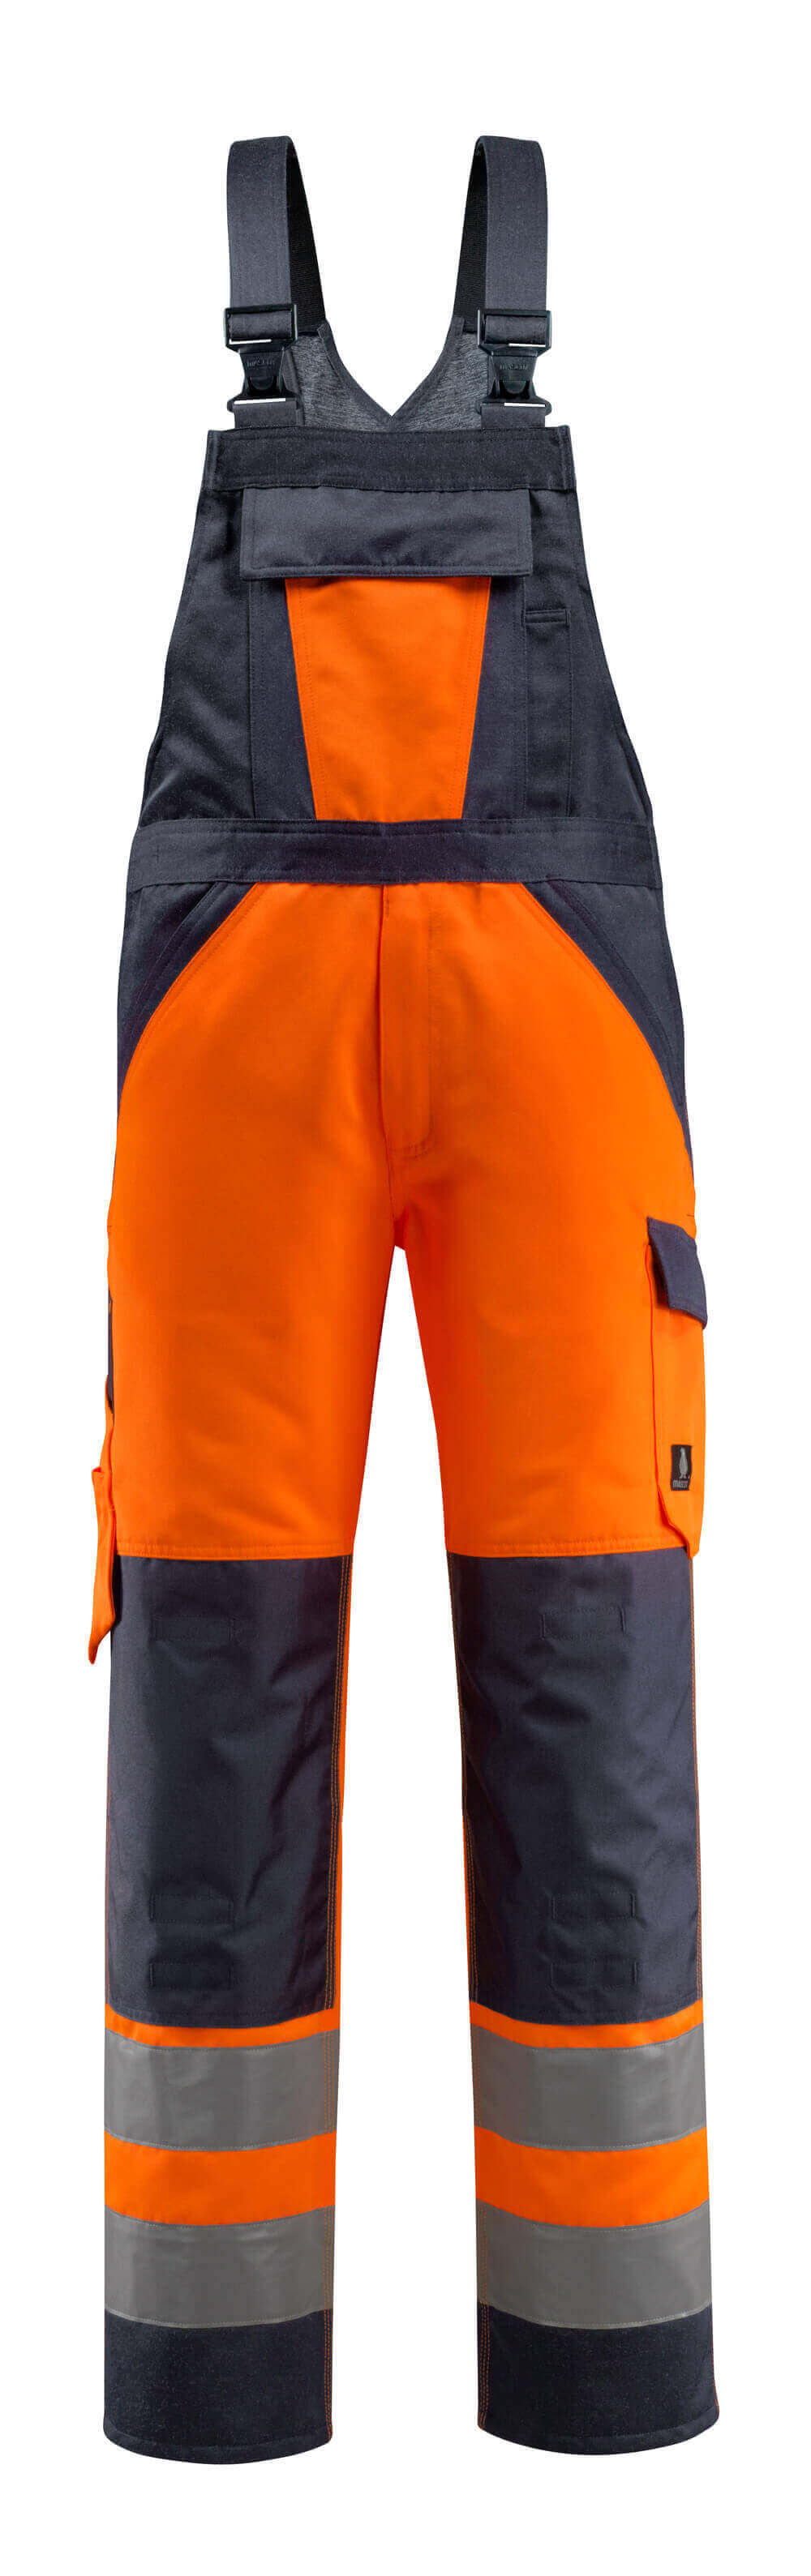 15969-948-14010 Bib & Brace with kneepad pockets - hi-vis orange/dark navy